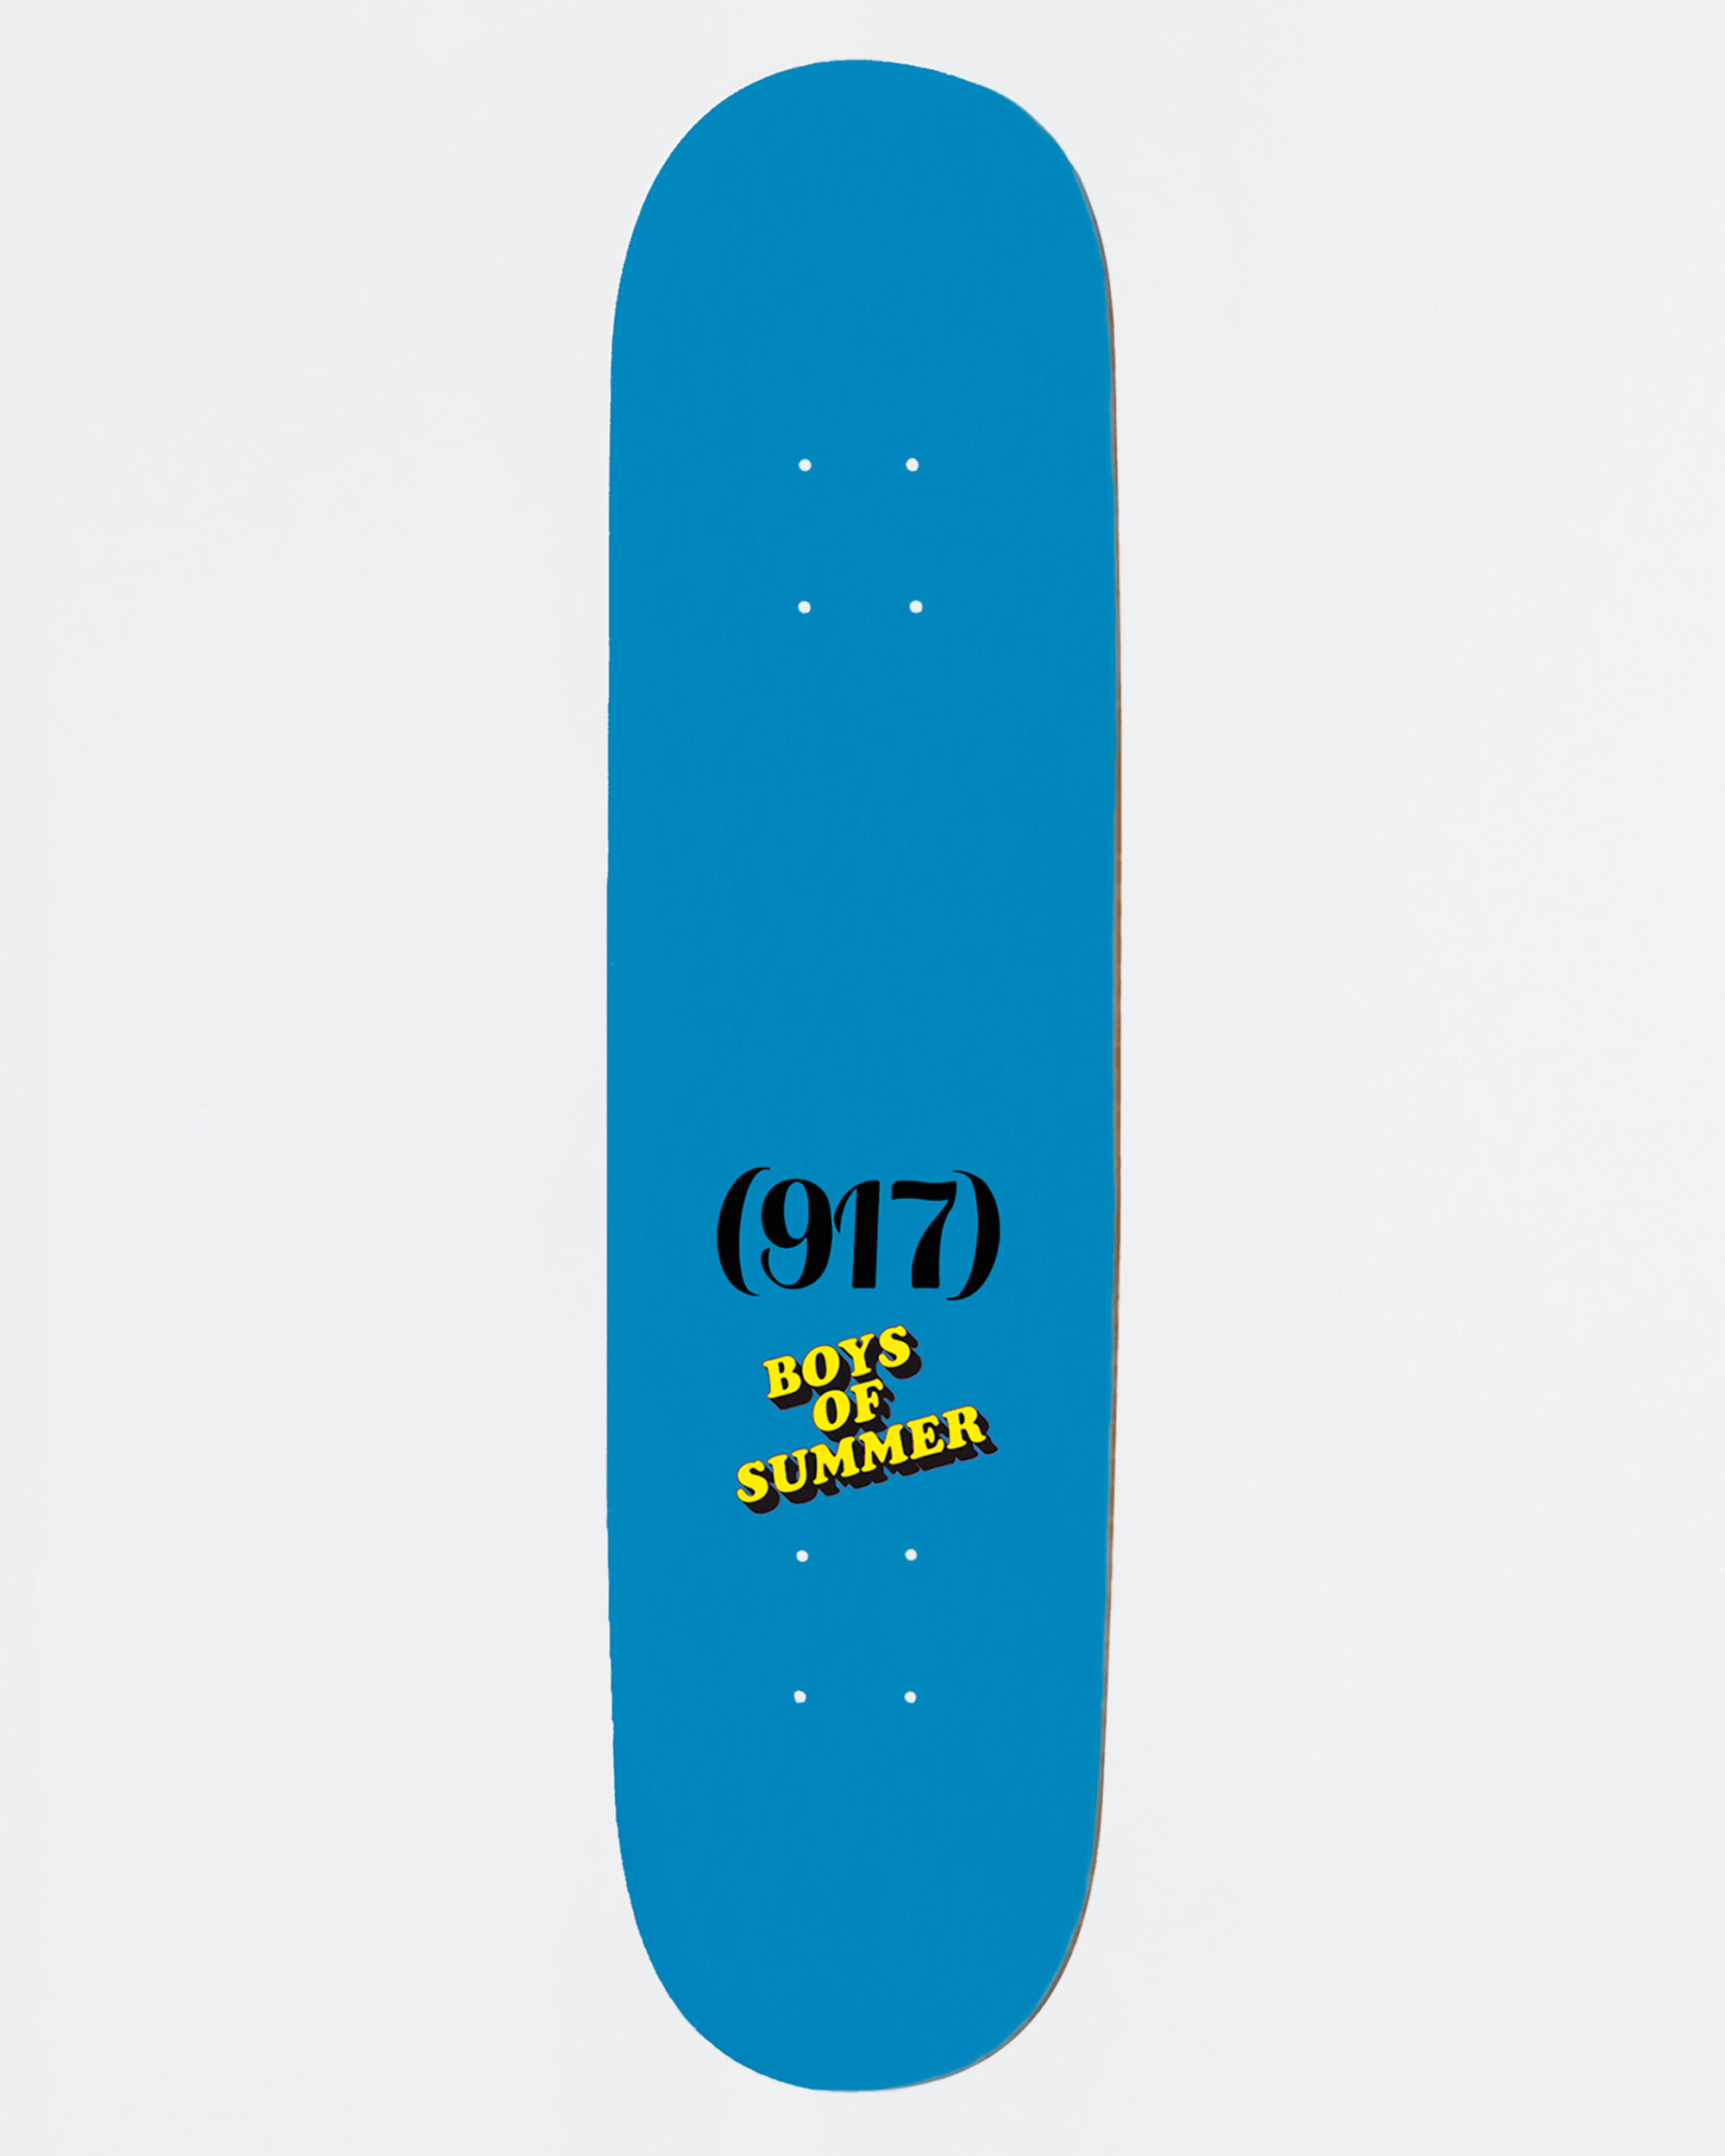 Call Me 917 x Boys Of Summer Tino 8,5" Deck